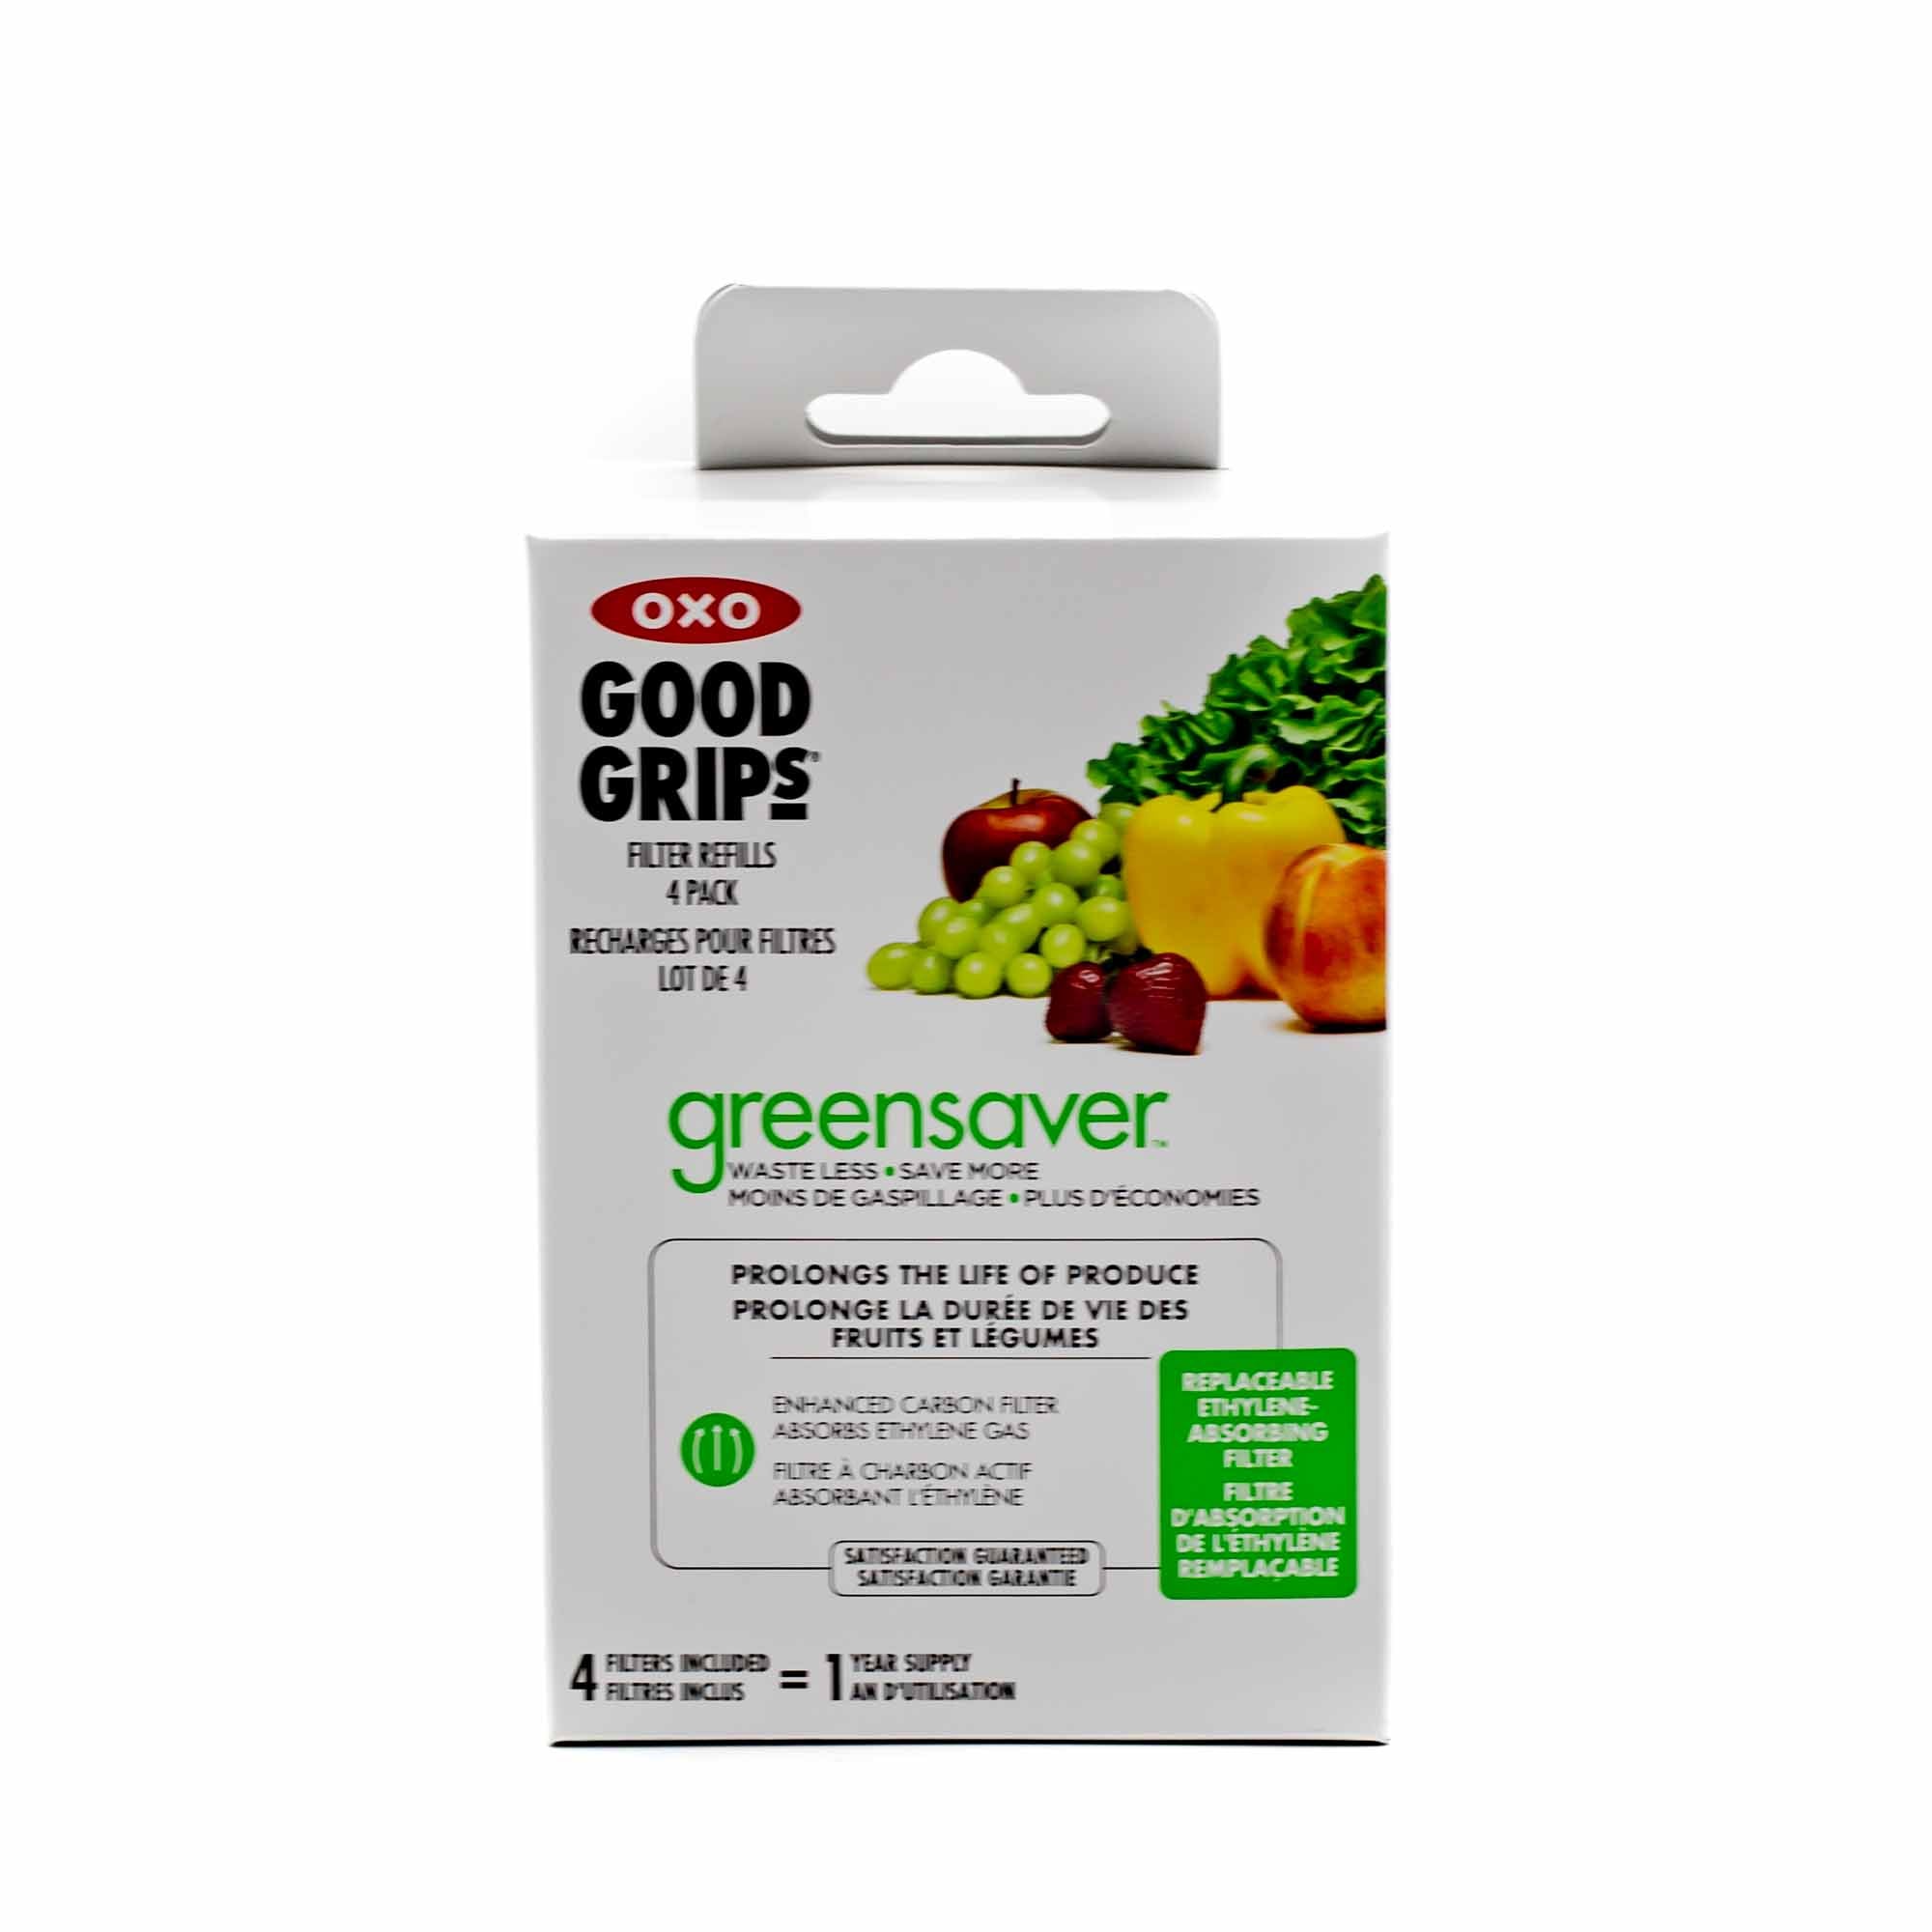 OXO Good Grips Greensaver Carbon Refills - 4 Pack